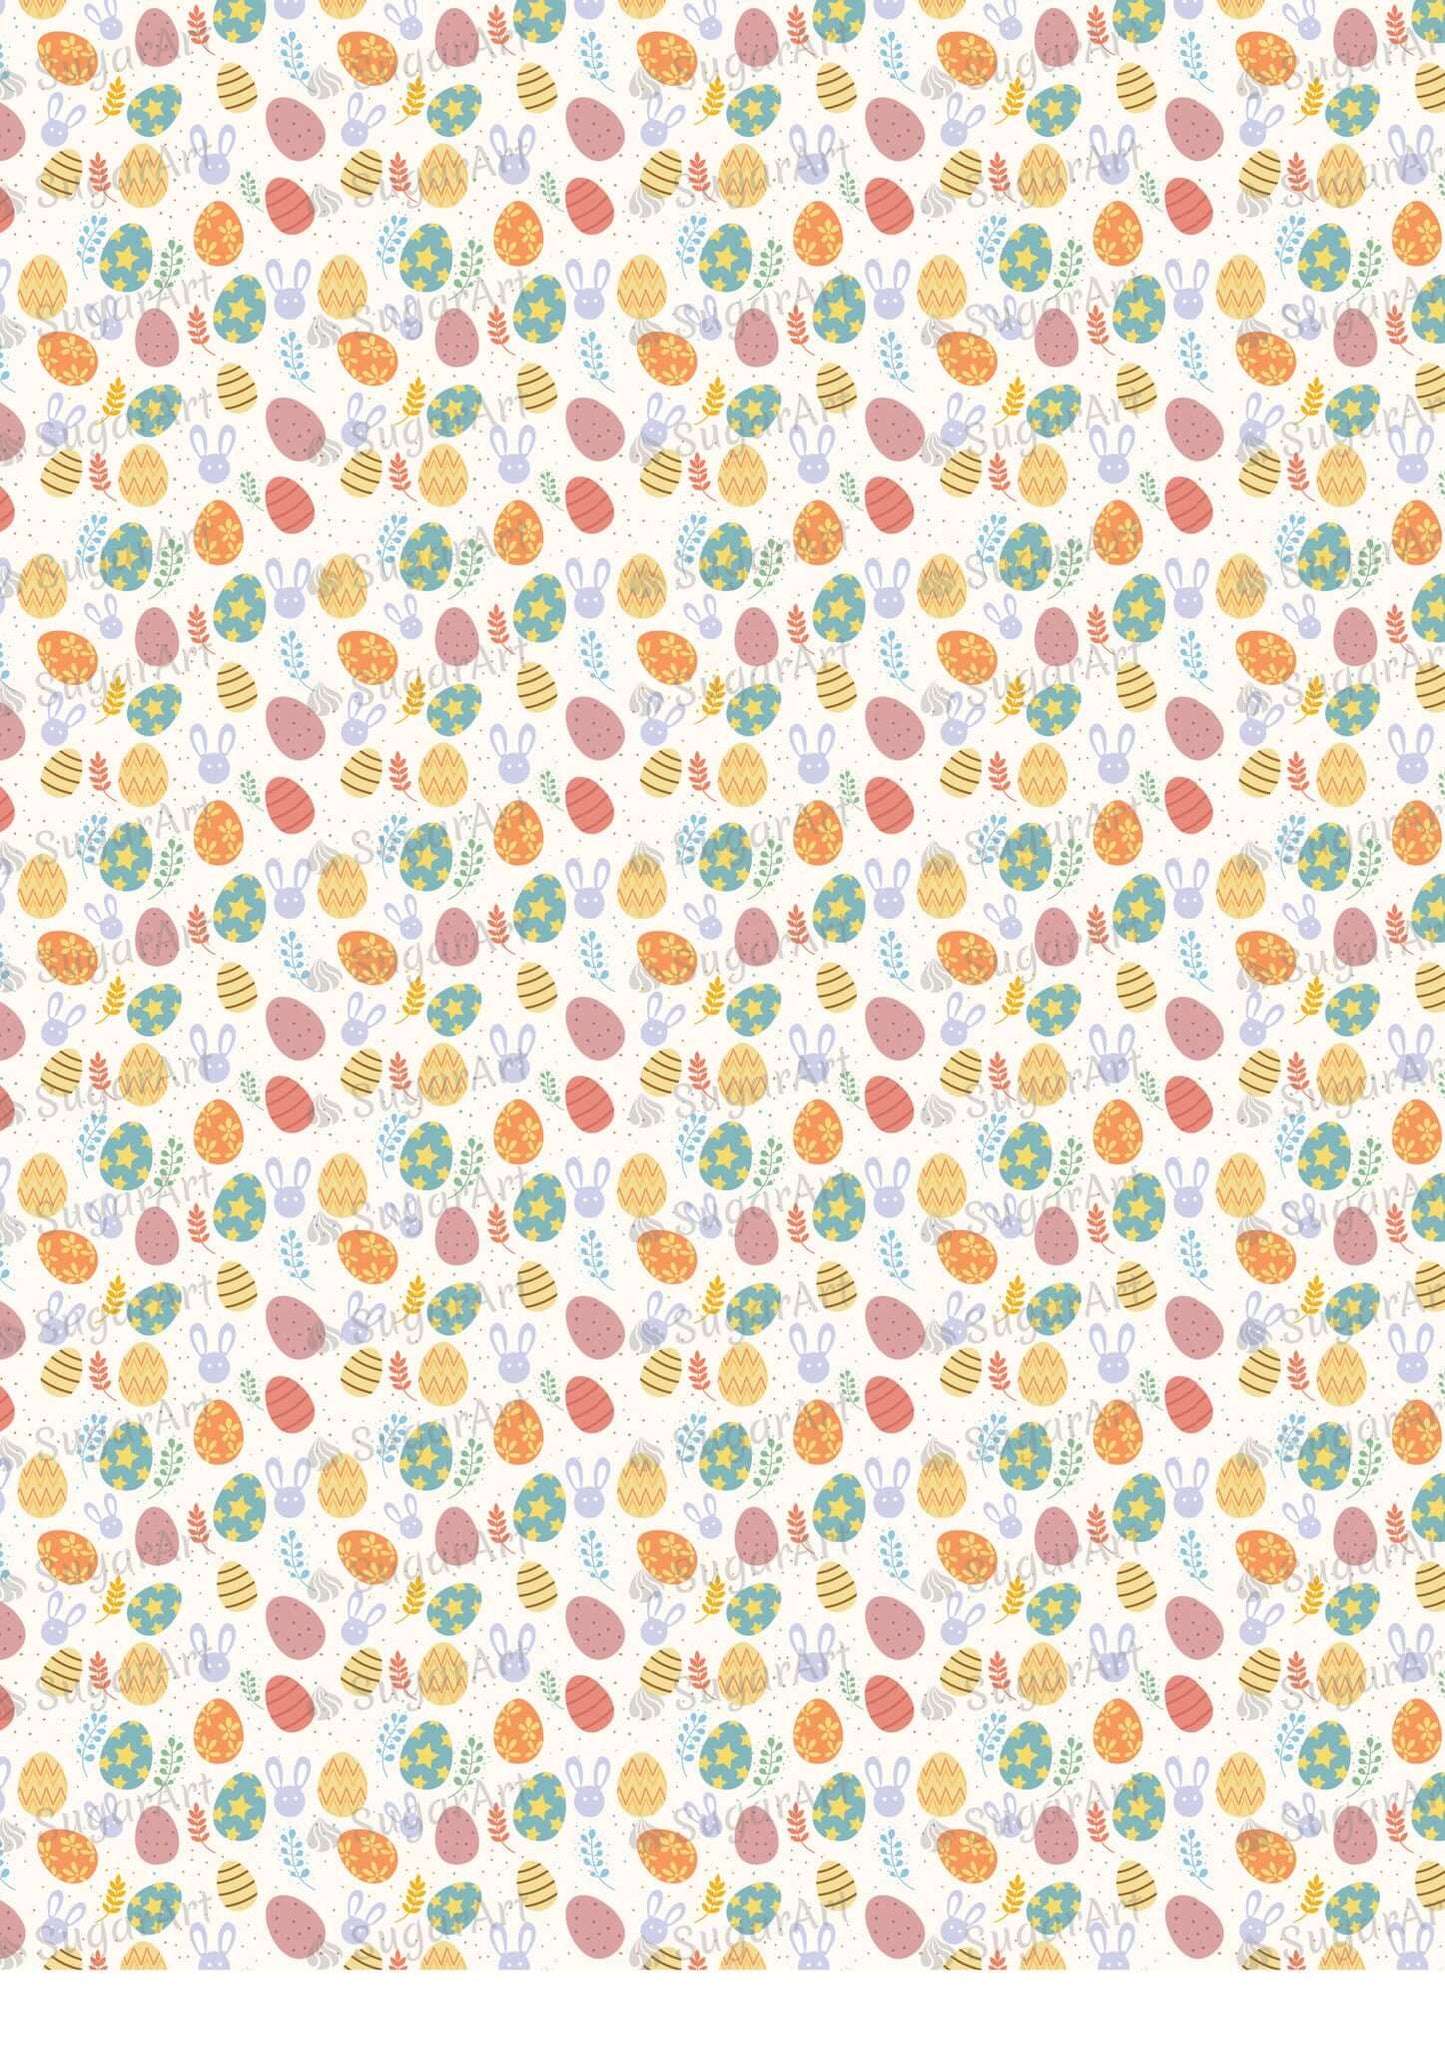 Colorful Easter Day Pattern - HSA002-Sugar Stamp sheets-Sugar Art